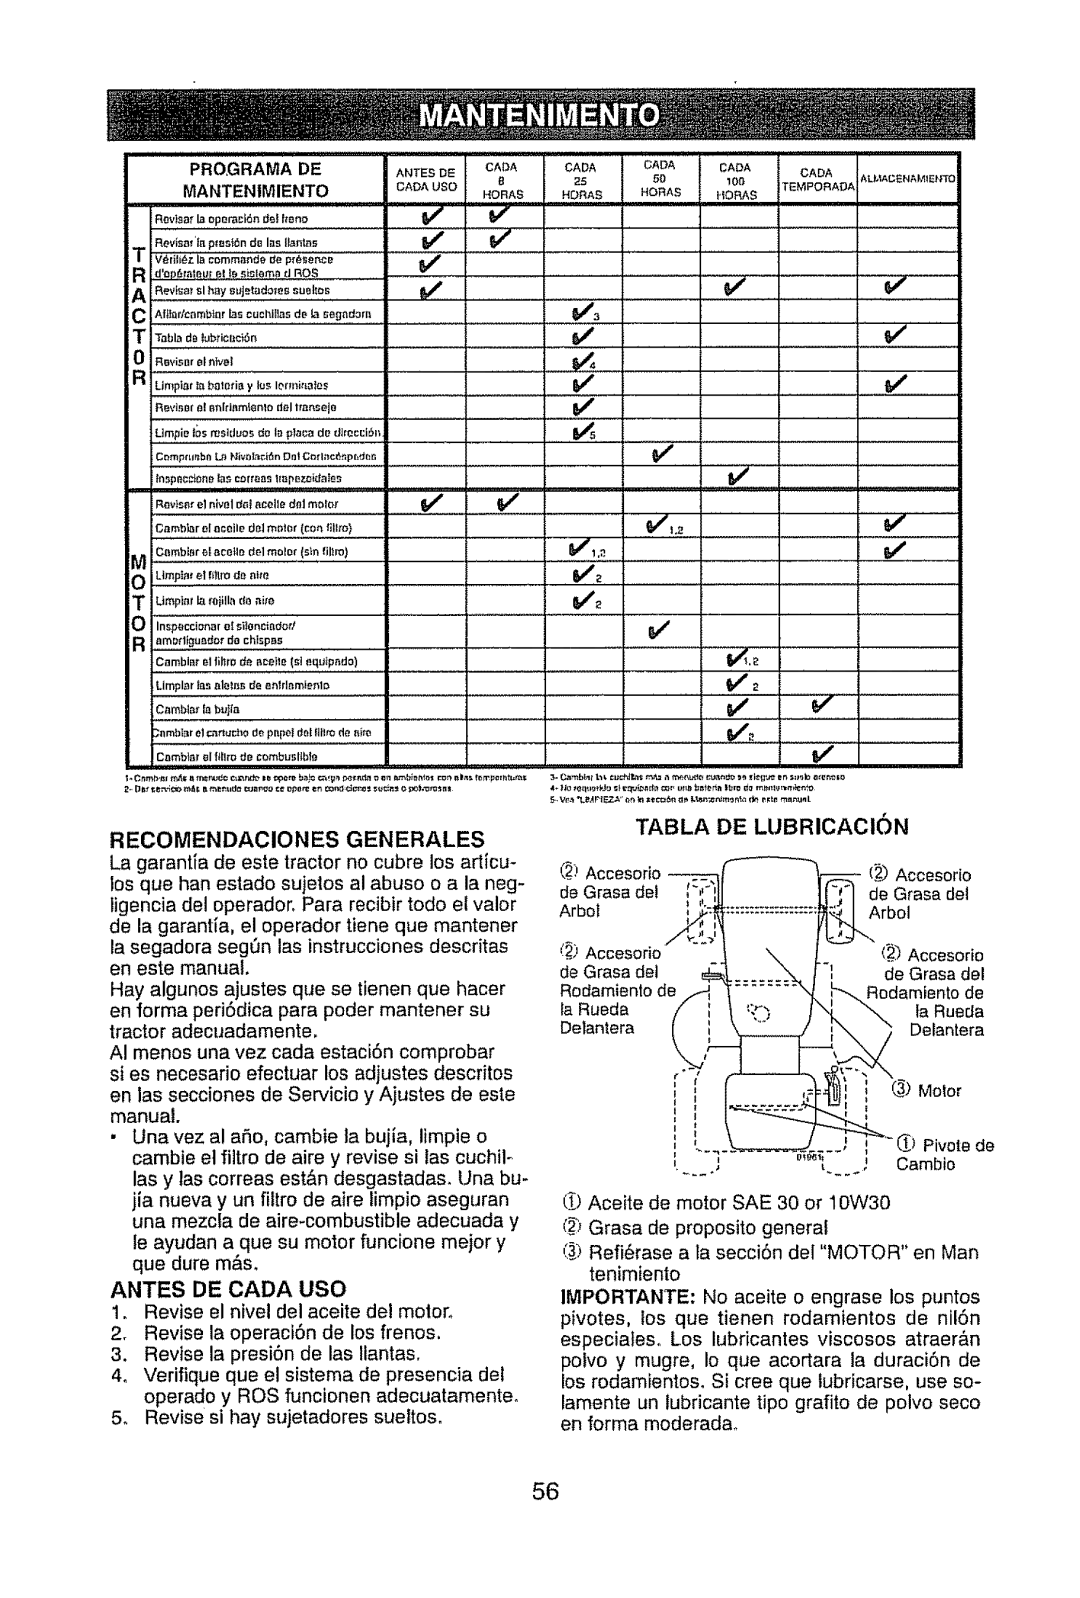 Craftsman 917.289470 manual au,+,_+, li o,o, I4, Ruem, MANTENIMIENTO CAD^USO e, Tabla, Lubricacion 